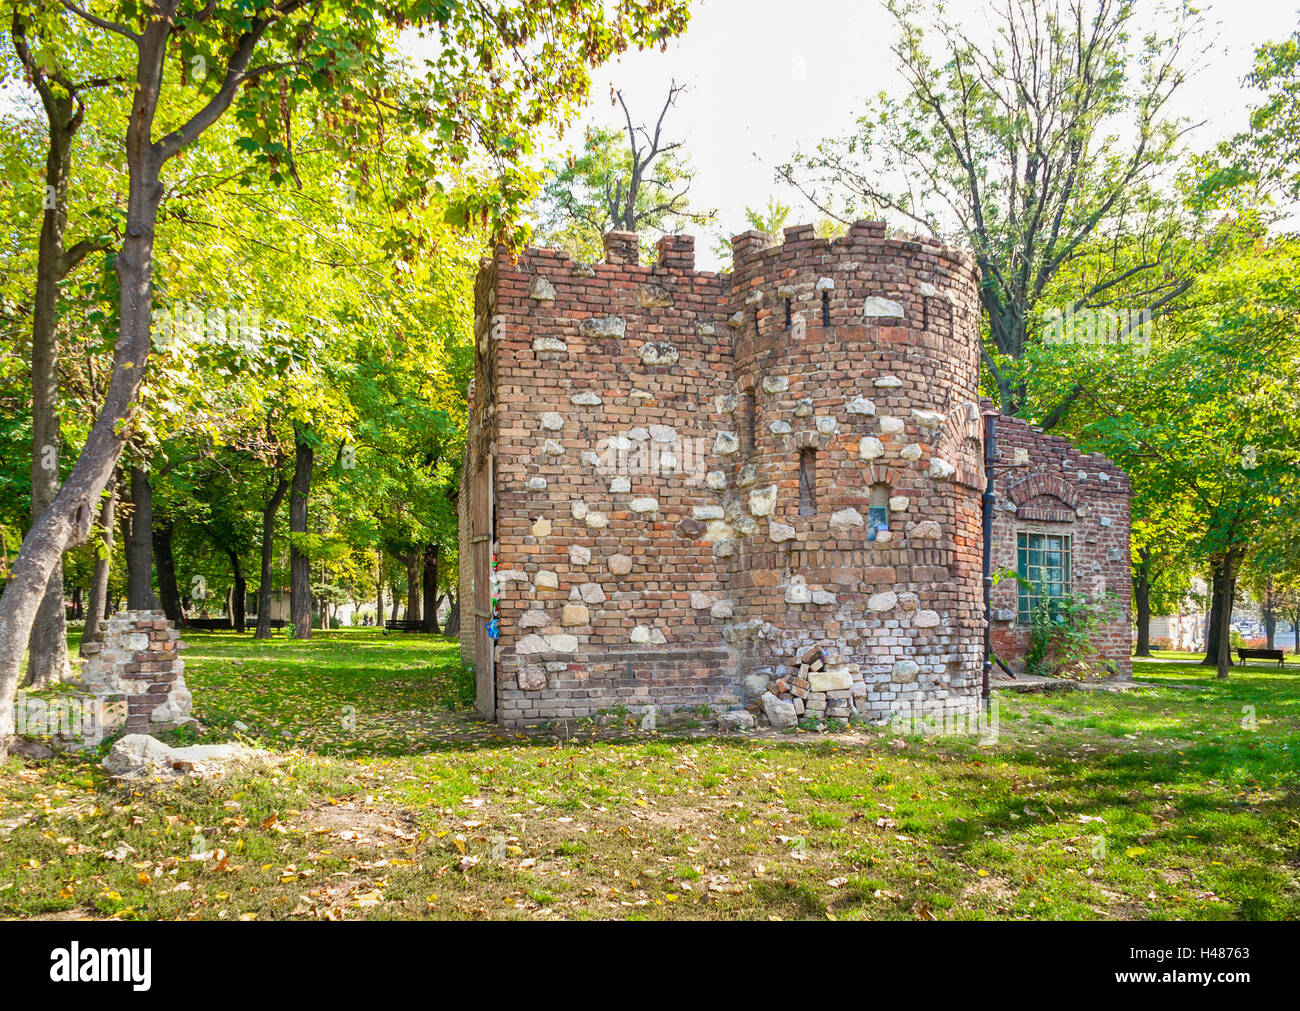 Ruins of medieval building in Kalemegdan park in Belgrade, Serbia. Stock Photo